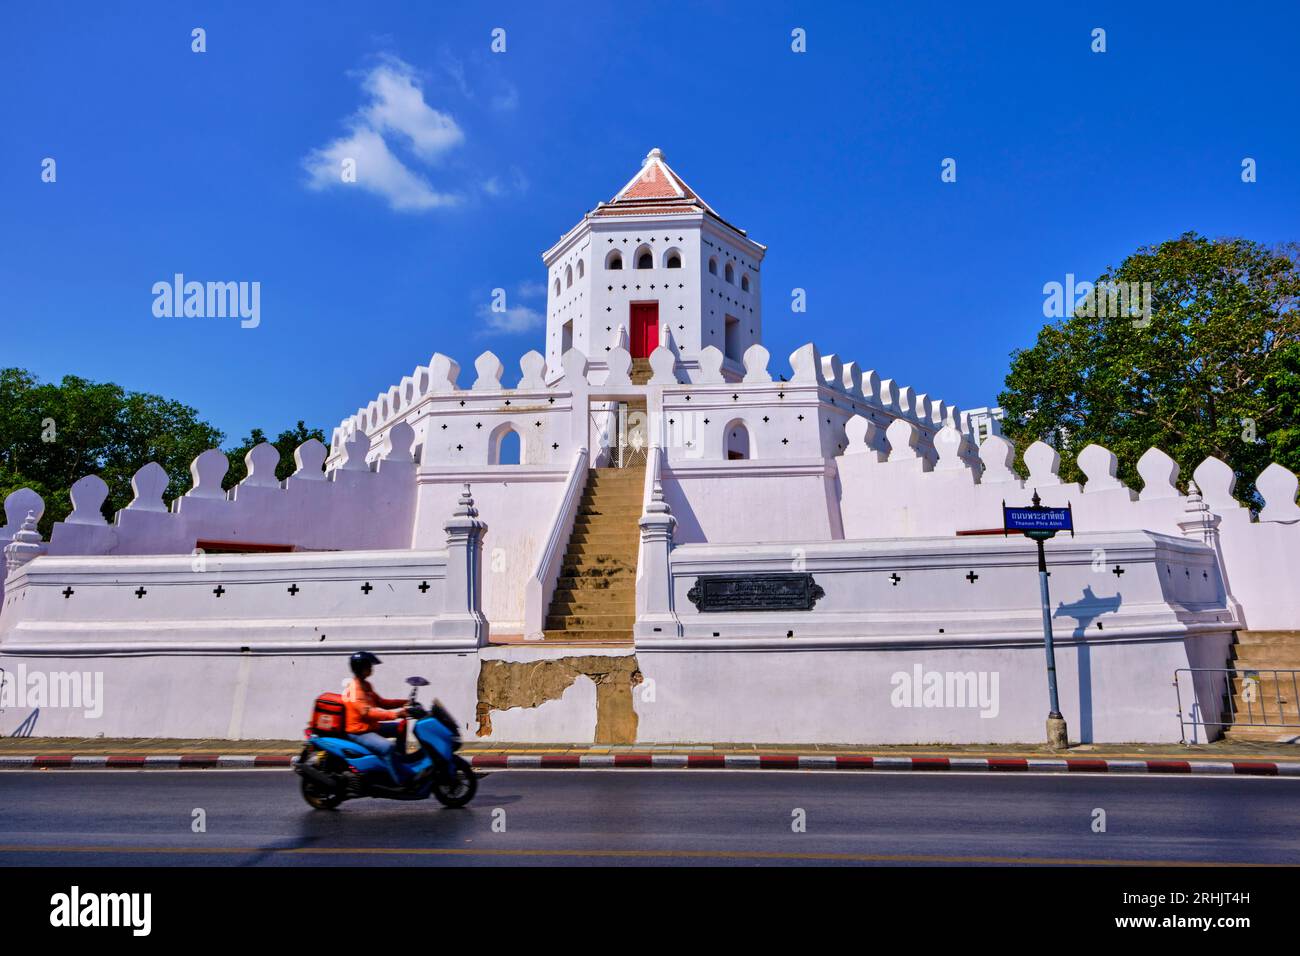 Thailand, Bangkok, Phra Nakhon district, the Pom Phra Sumen fort built in 1783 Stock Photo